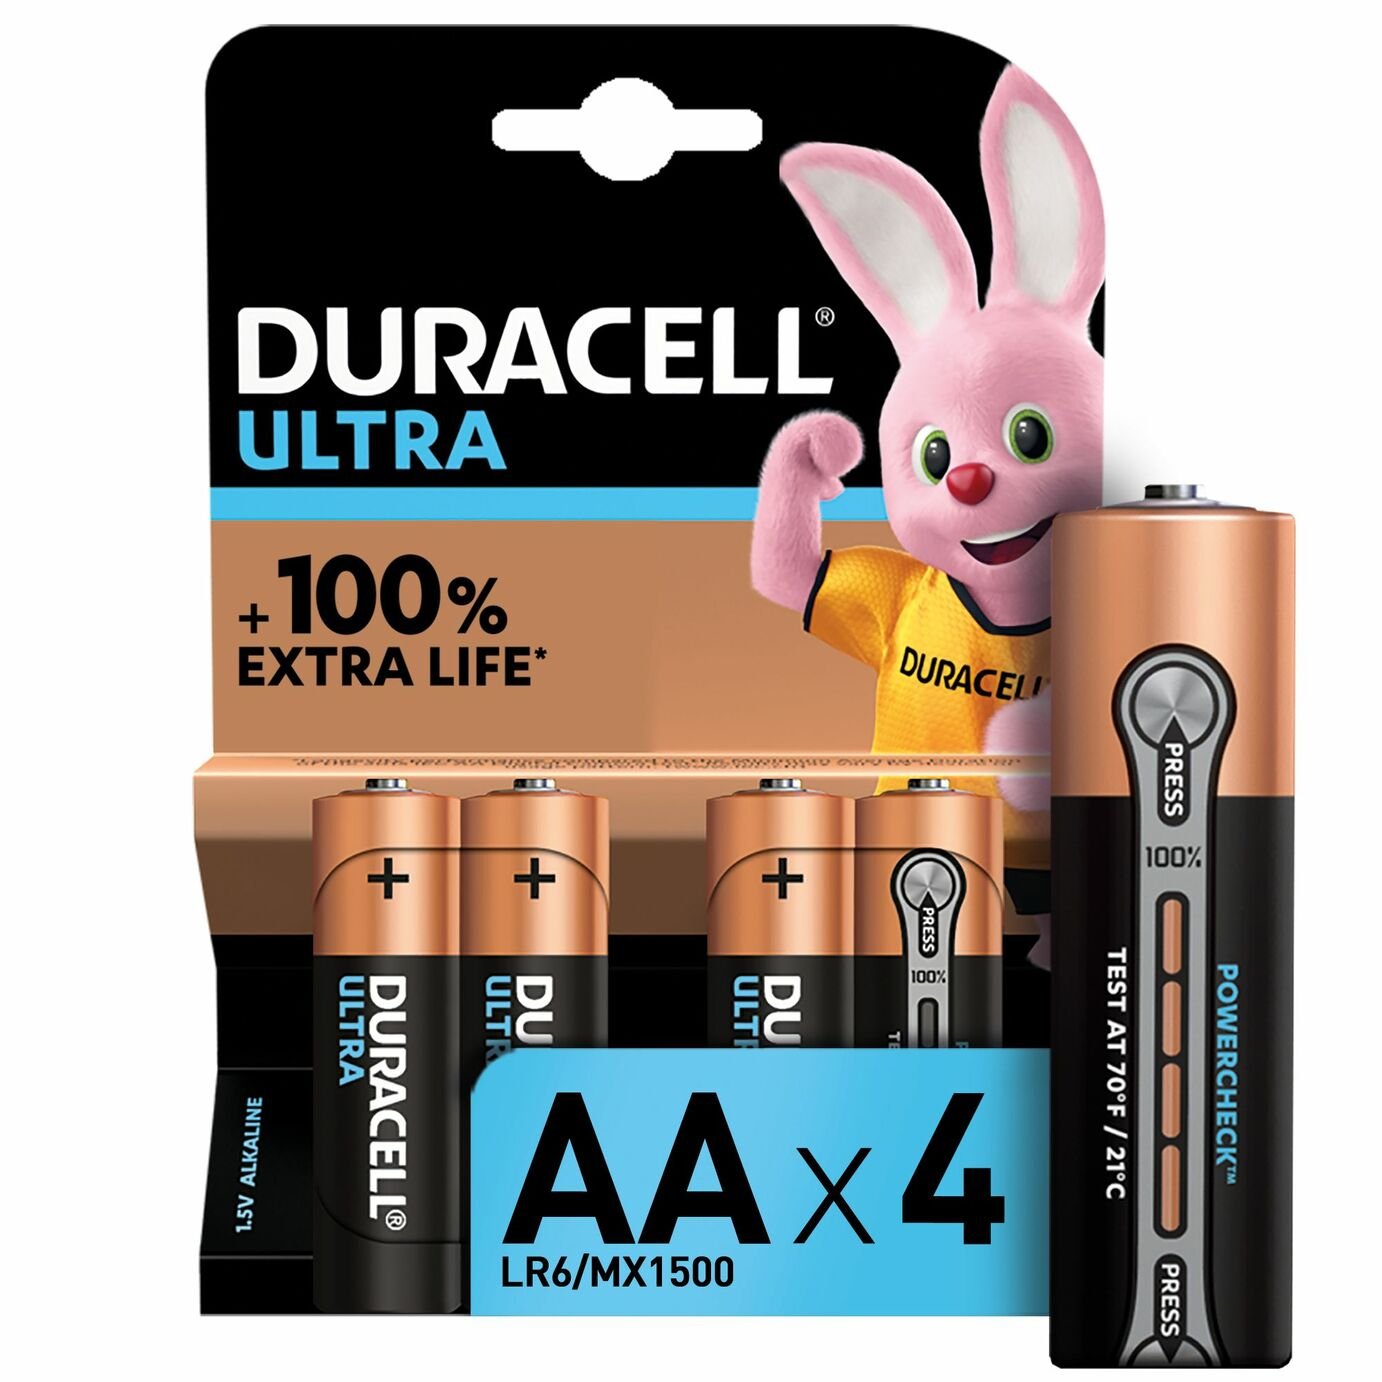 Duracell Ultra Alkaline AA Batteries - Pack of 4